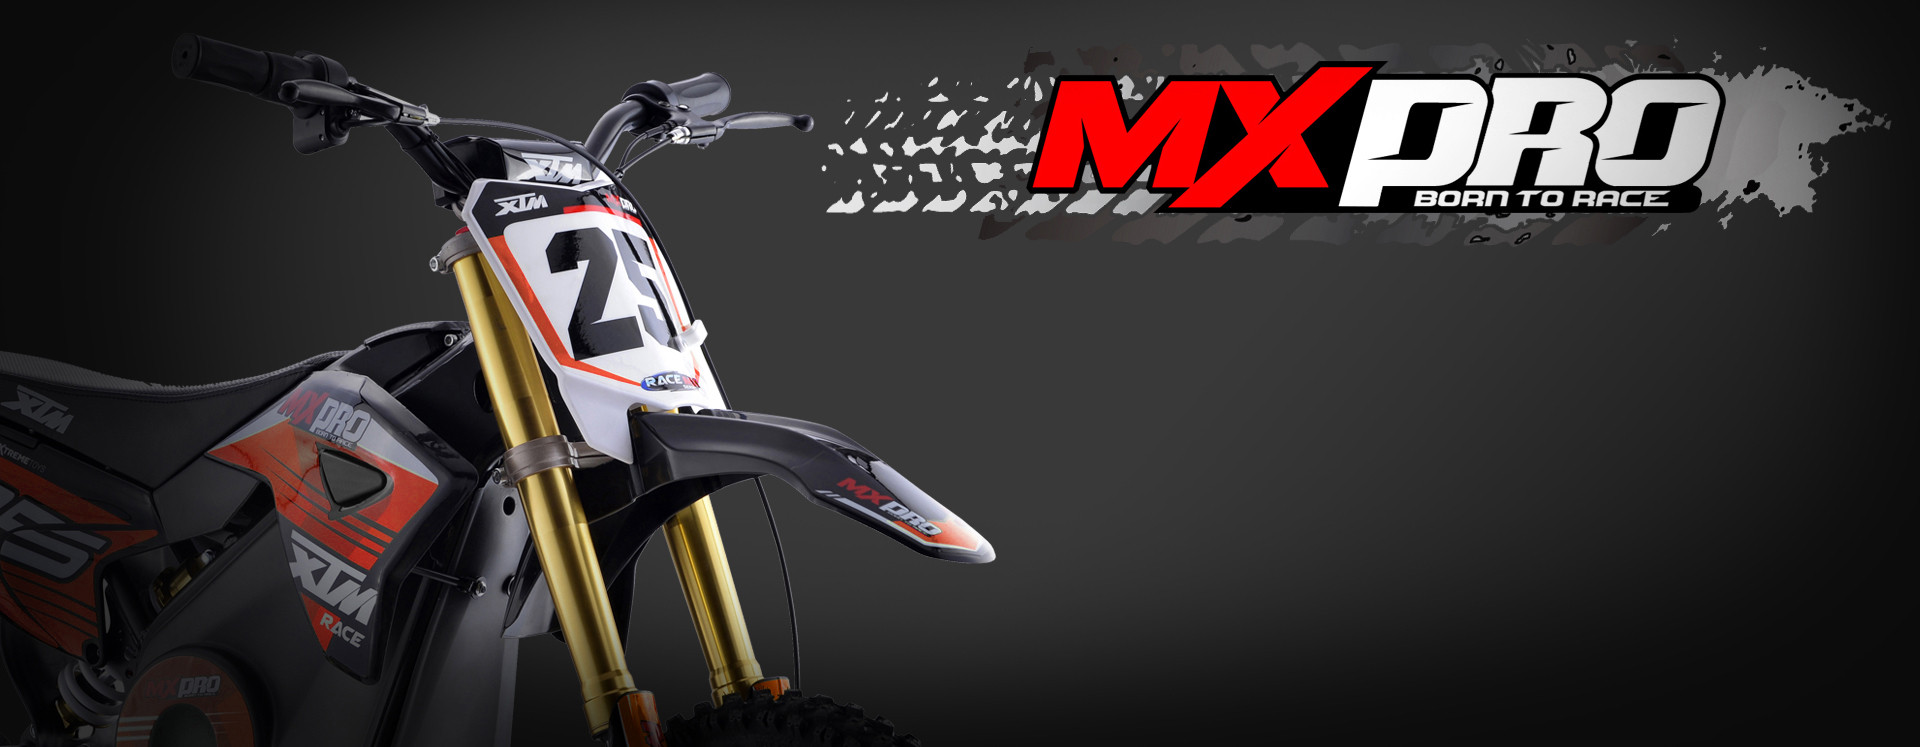 XTM MX-PRO 48V 1600W BIG WHEEL 14/12 LITHIUM DIRT BIKE ORANGE